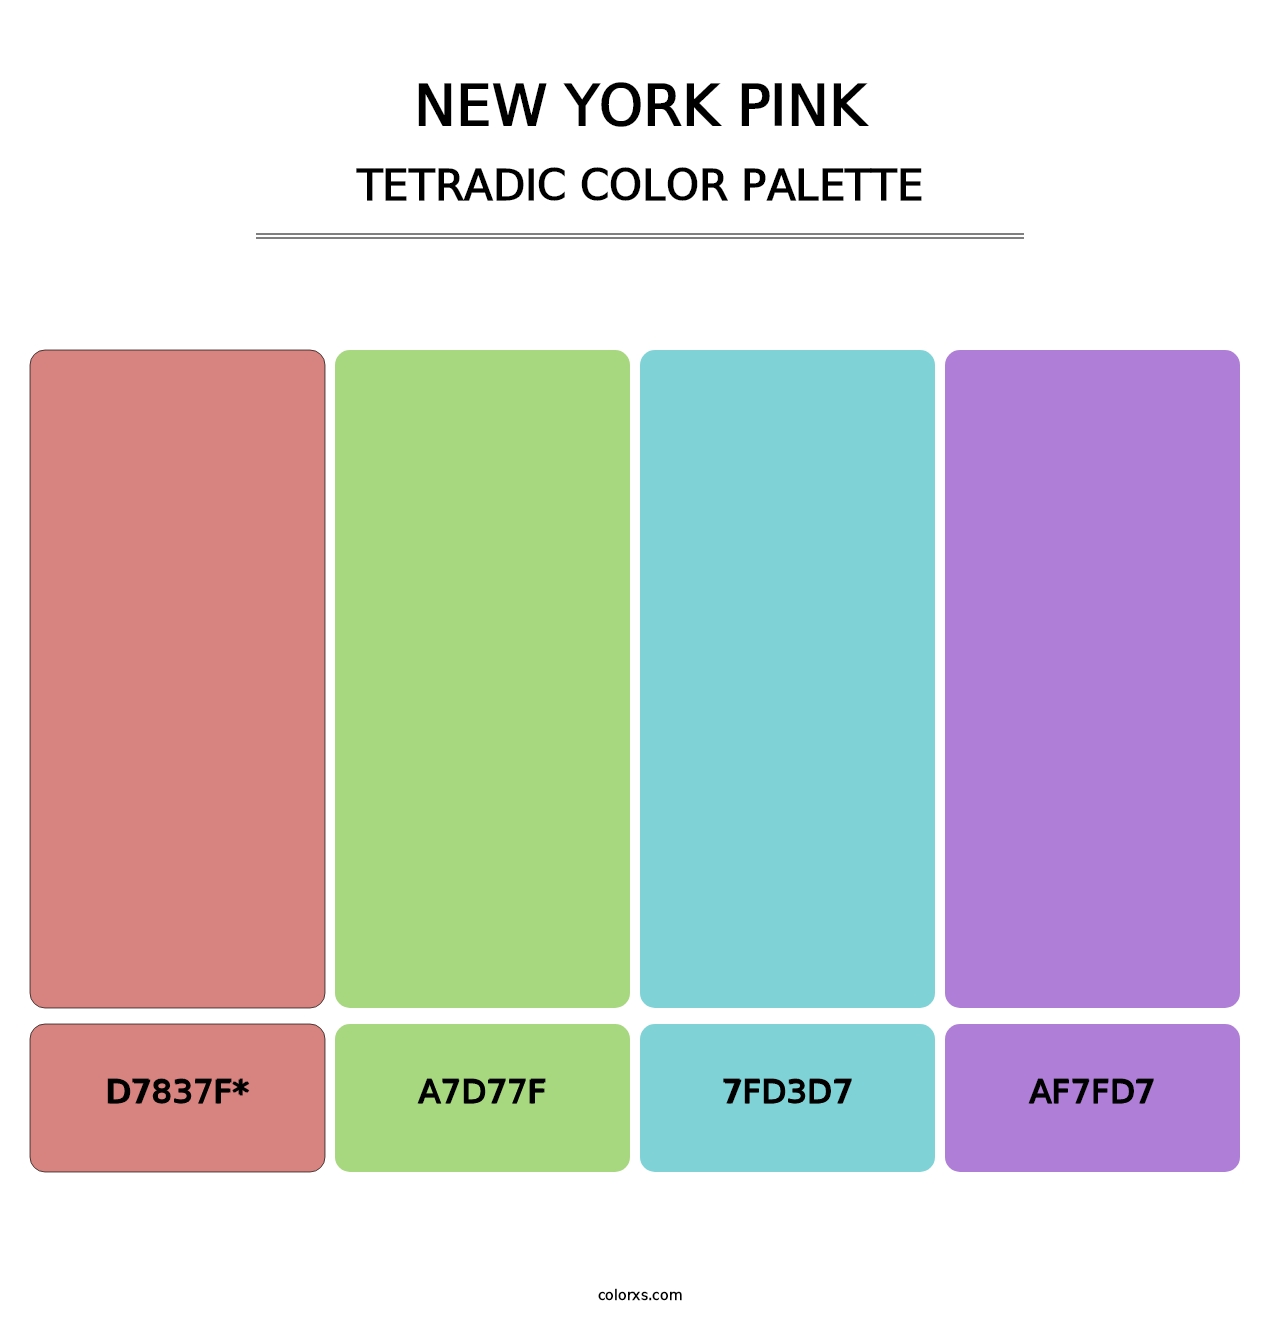 New York Pink - Tetradic Color Palette